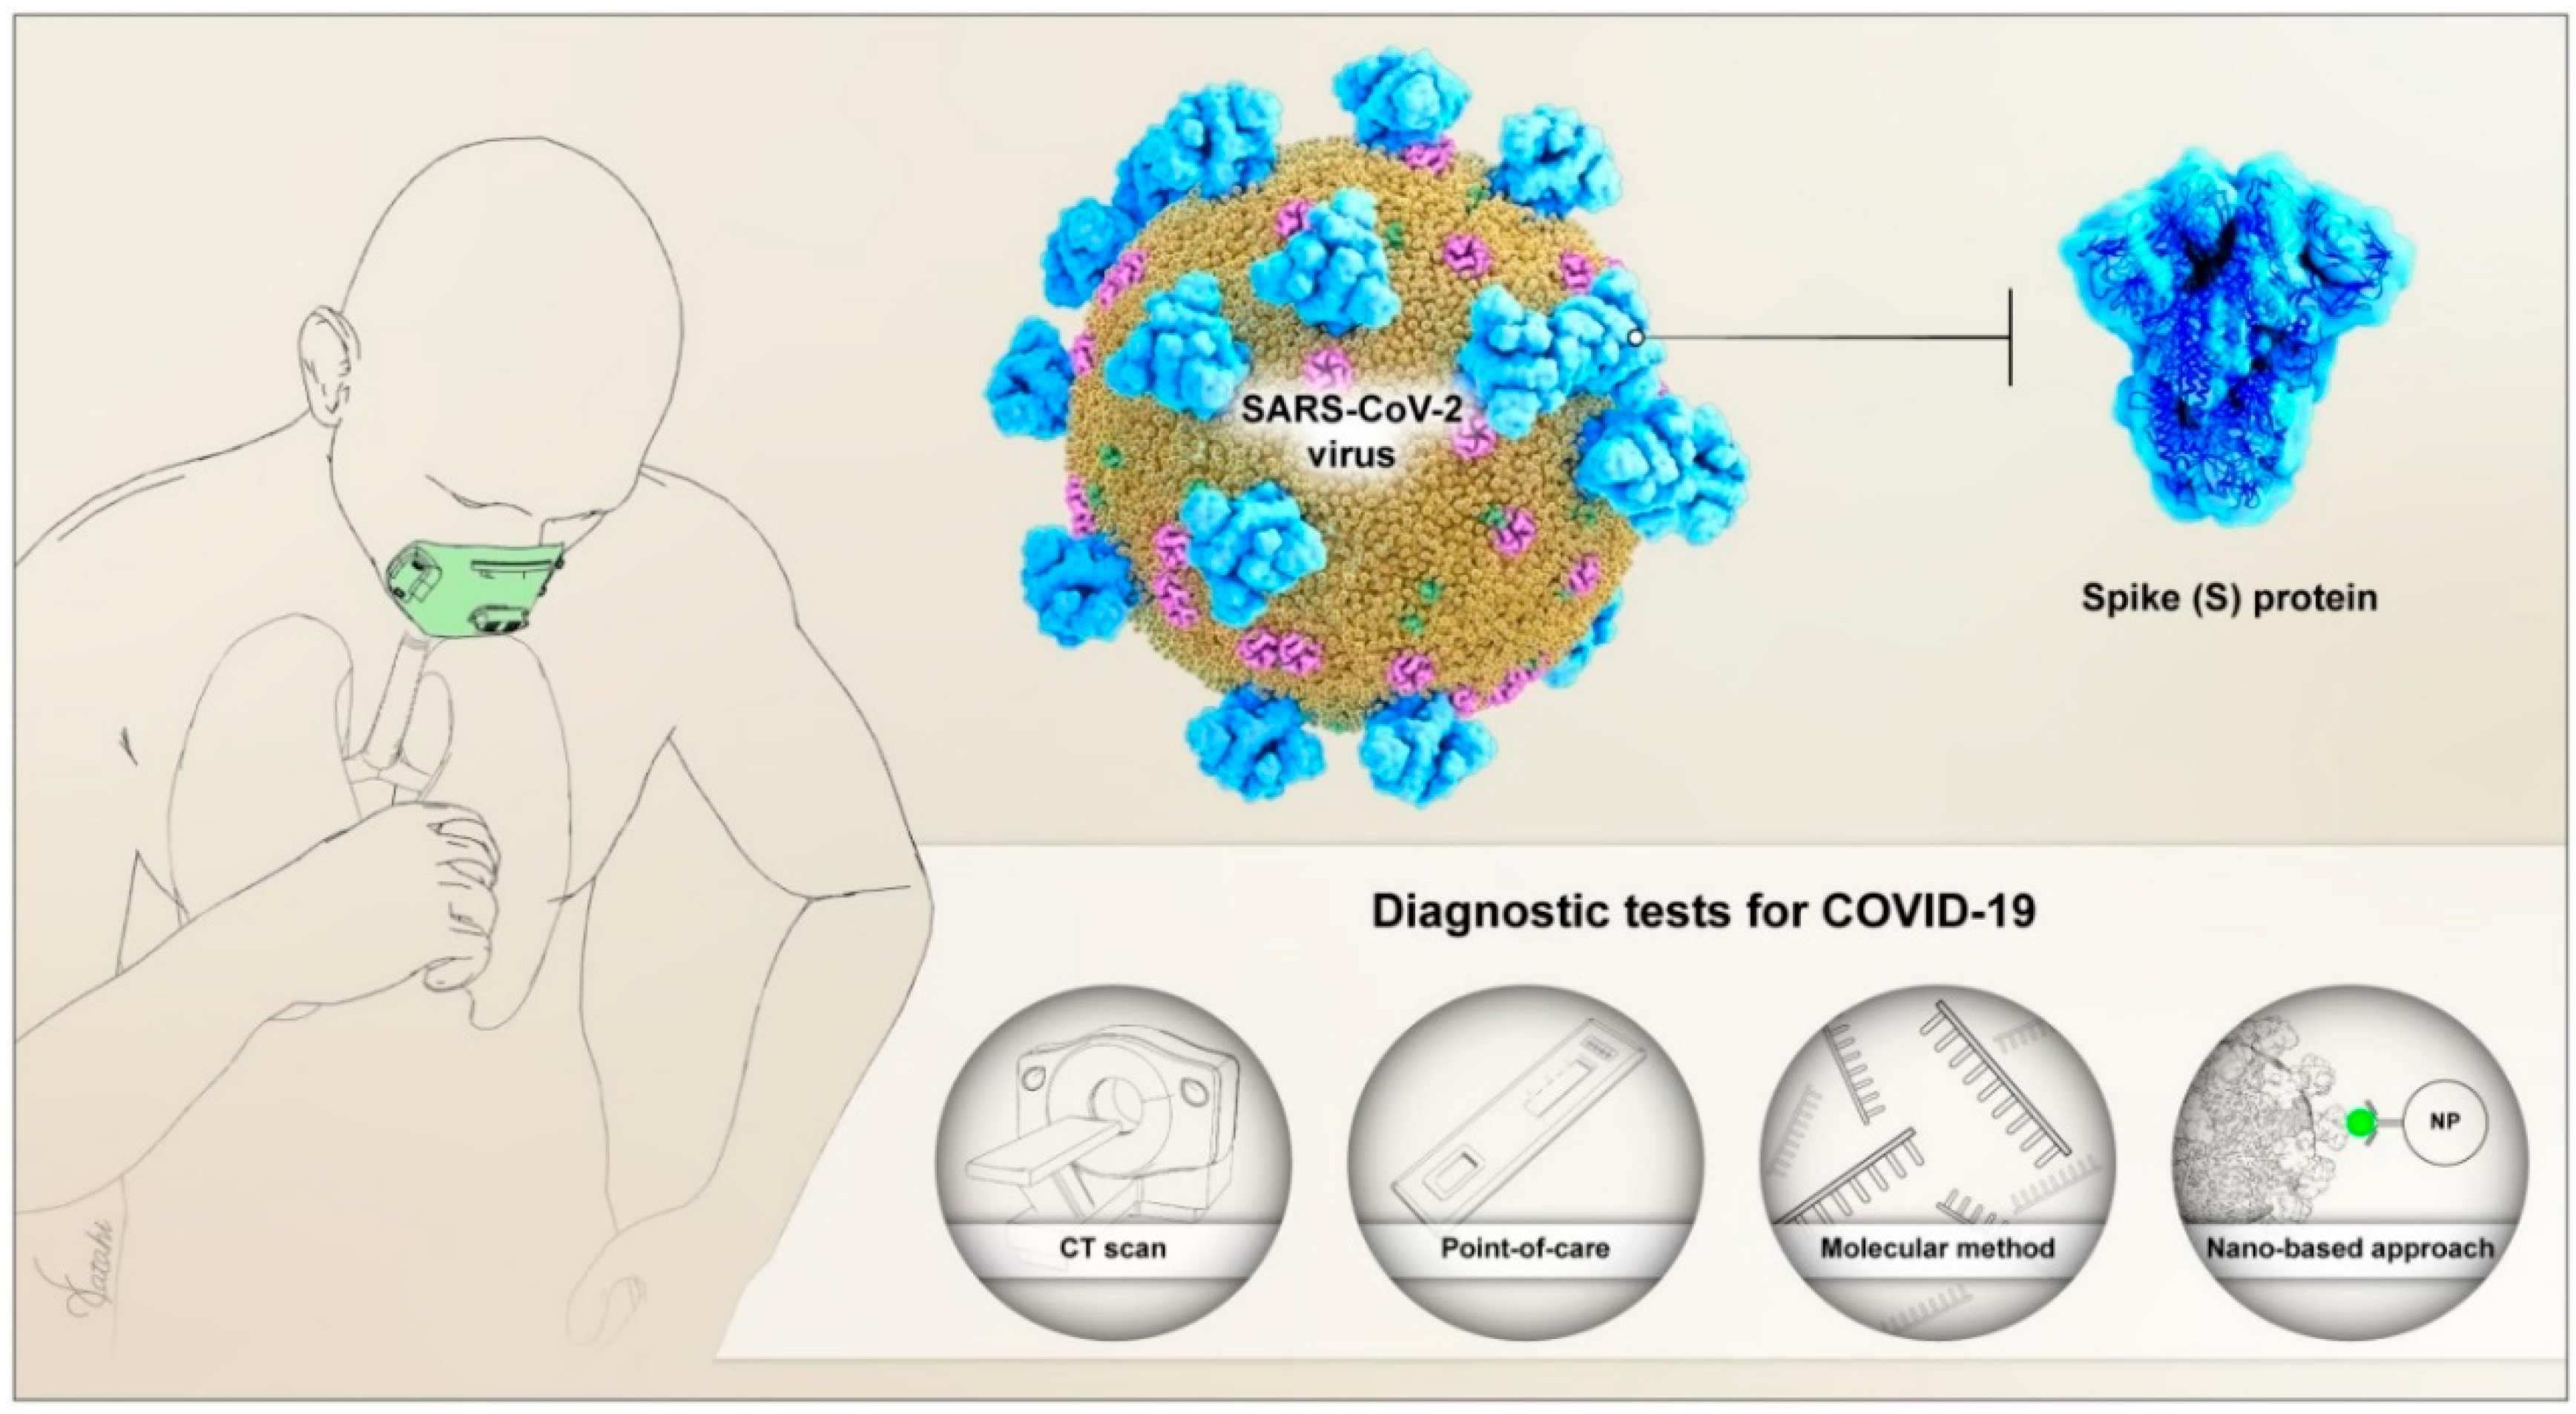 How SARS-CoV-2 impacts the body - Mammoth Biosciences